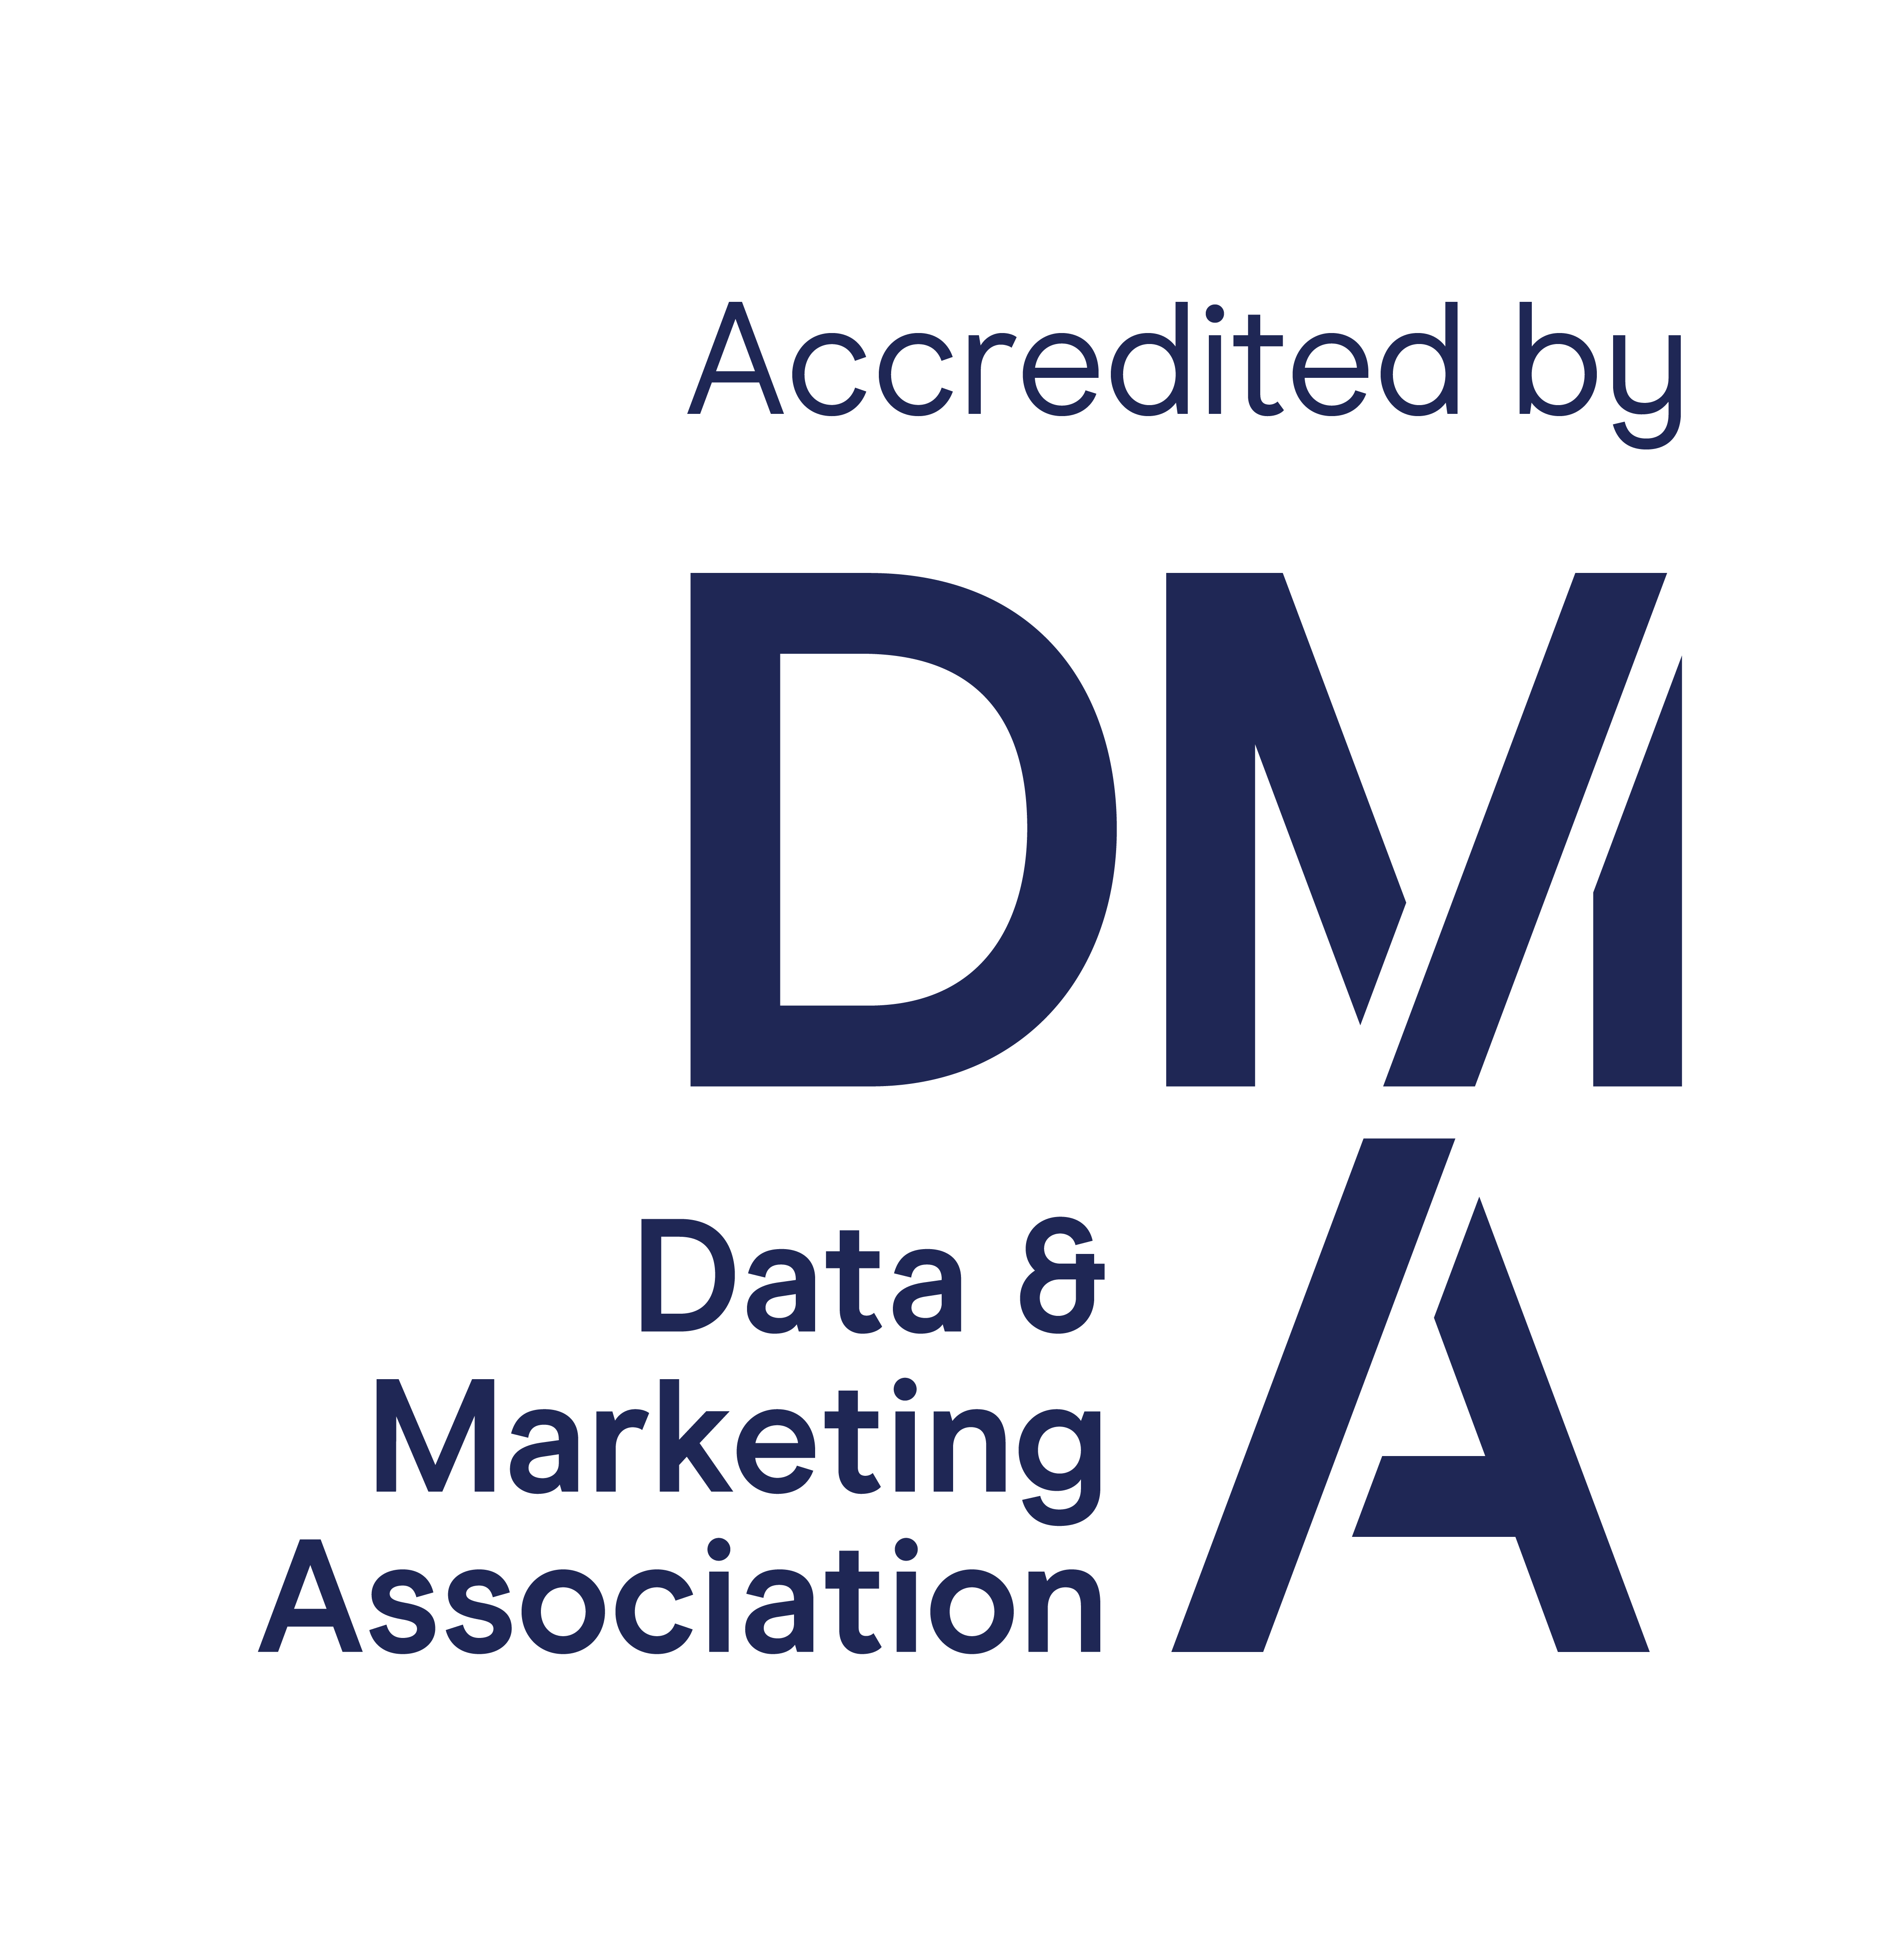 Data and marketing association logo